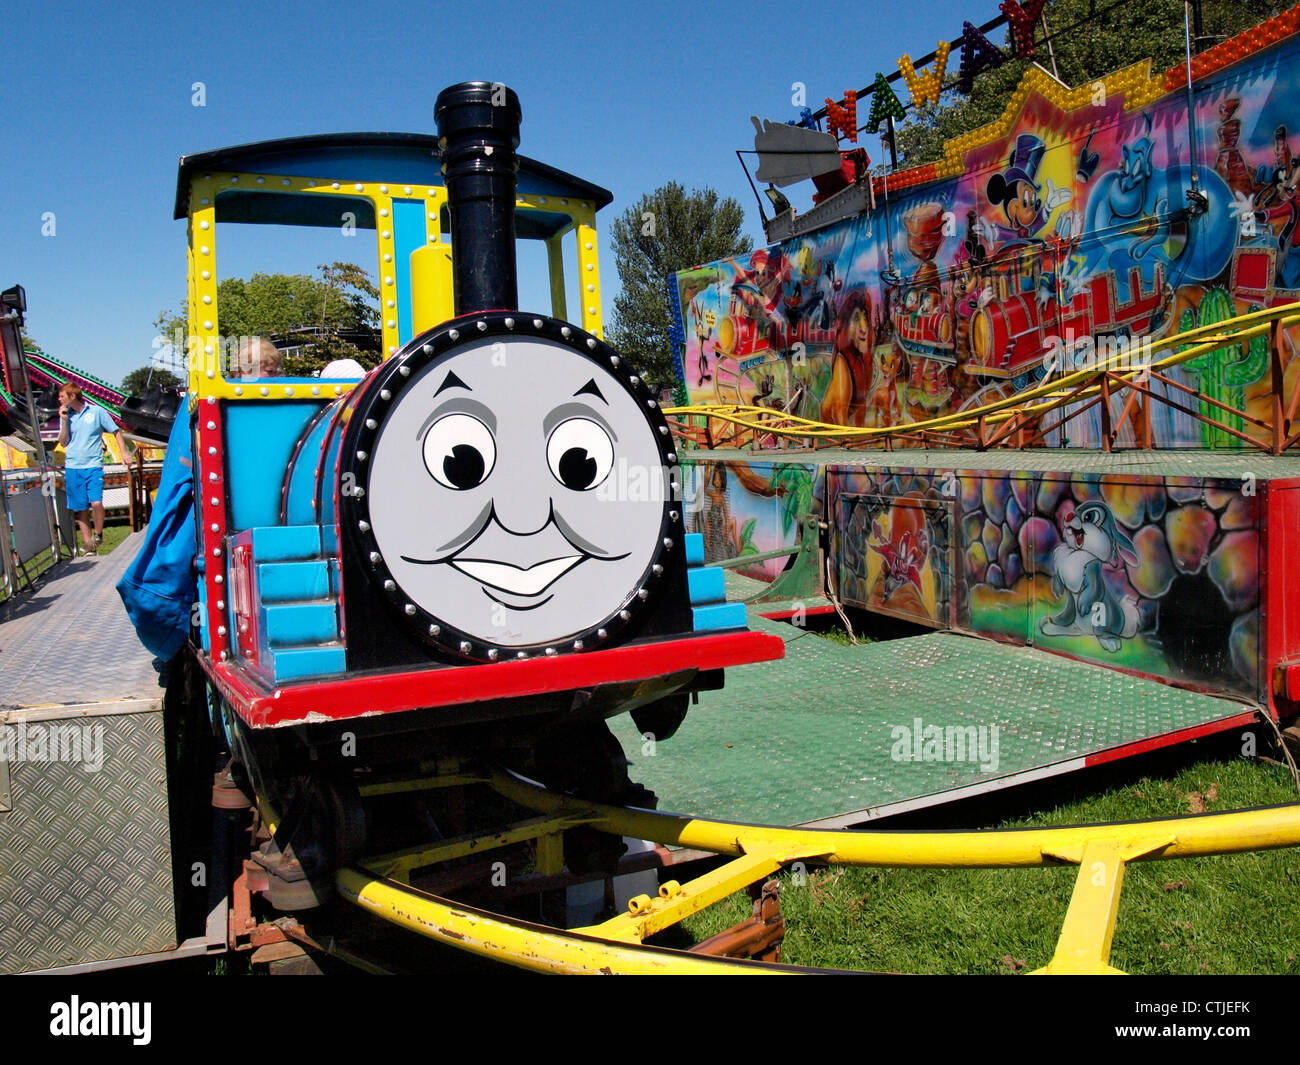 Thomas the Tank Engine ride at a fairground, UK Stock Photo